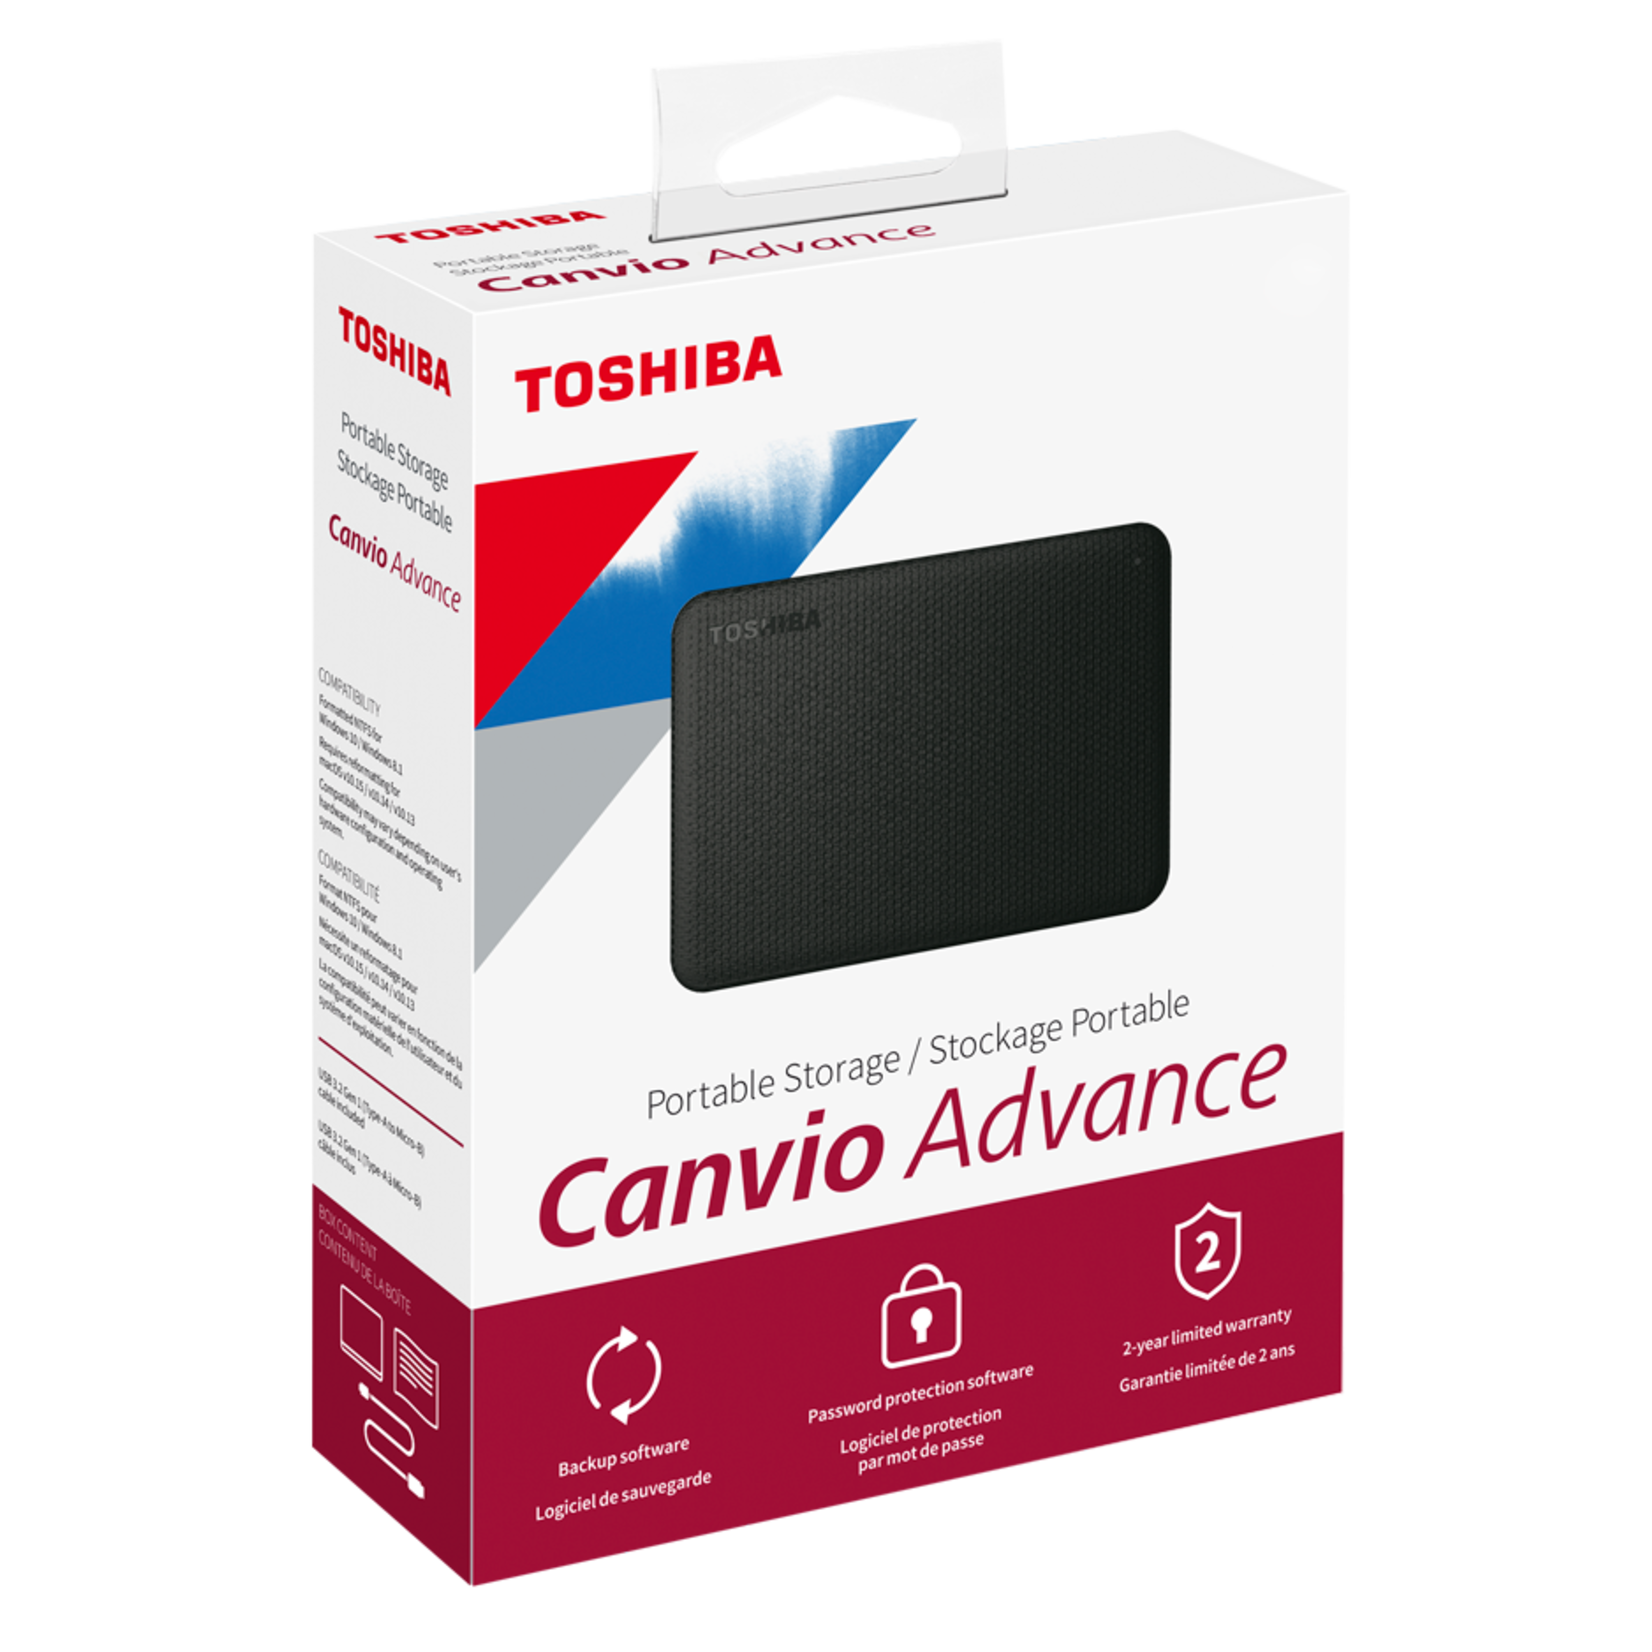 Toshiba **Toshiba Canvio Advance 2TB External Hard Drive Red